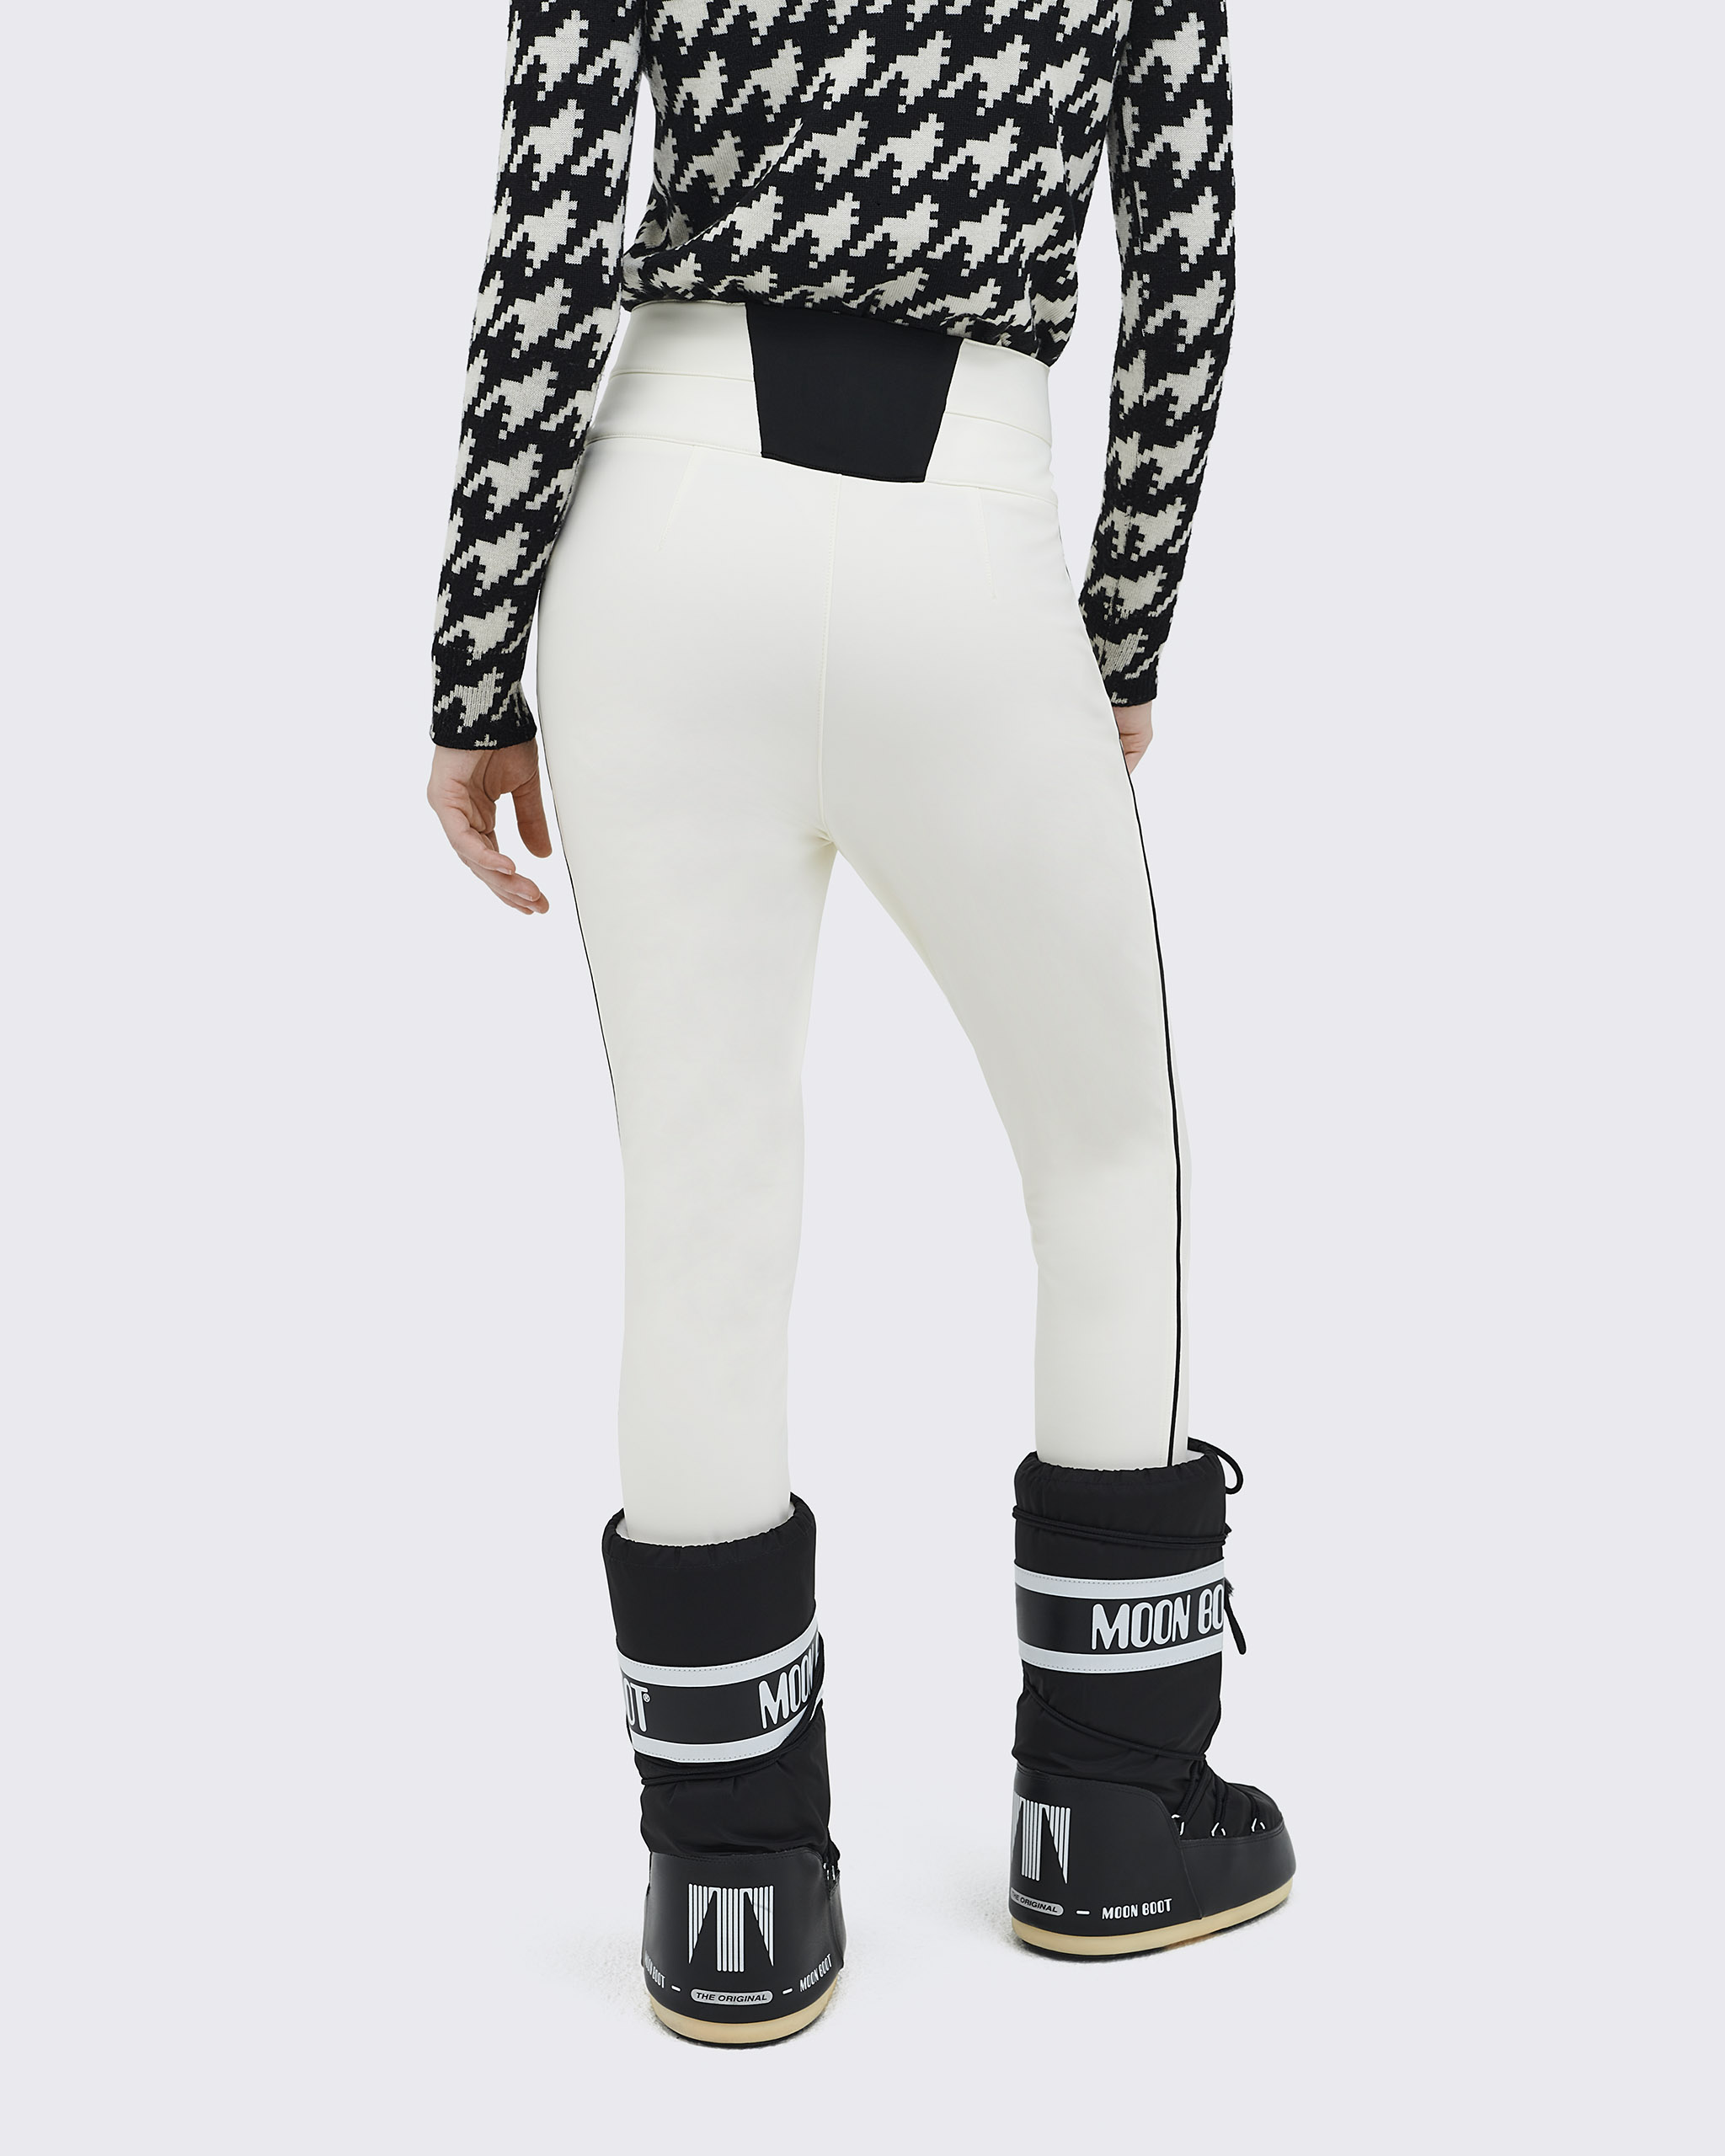 Perfect Moment 'AURORA' Star Gingham Black Print Ski Pants in Size L - MSRP  $550